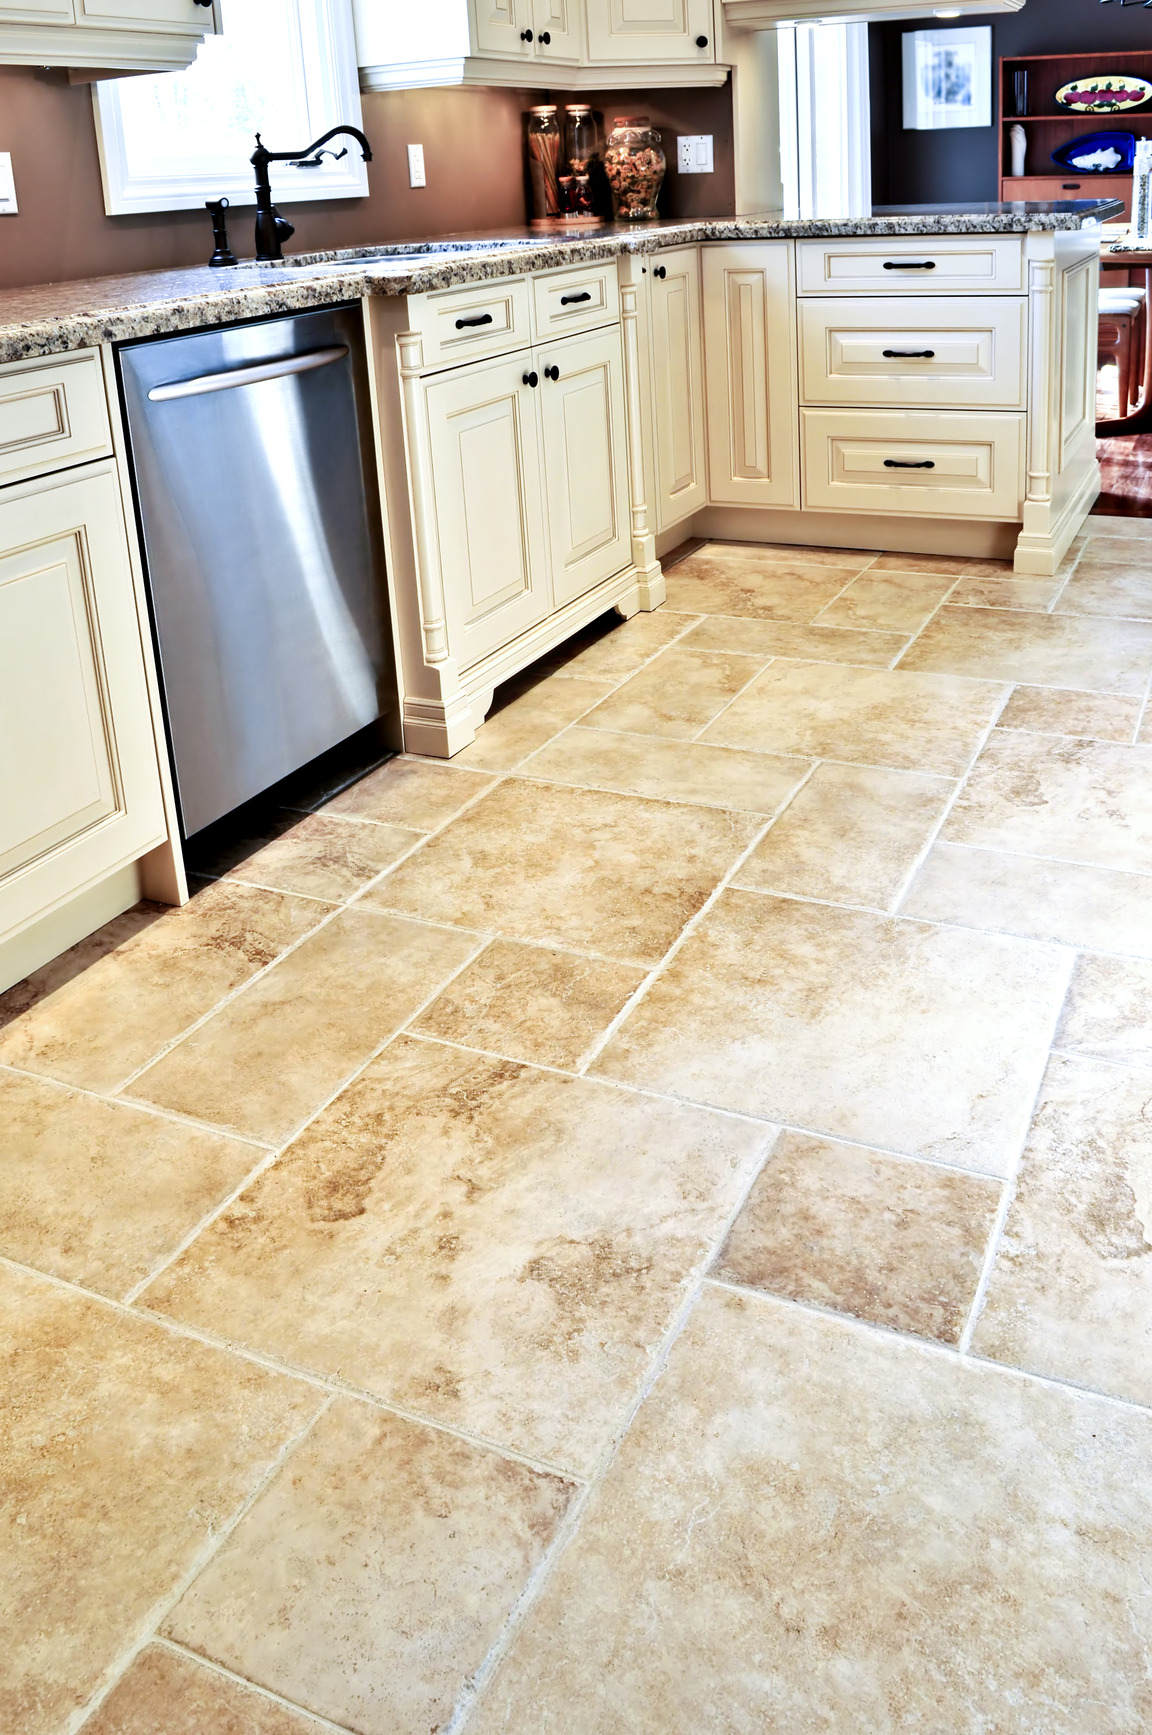 kitchen white cabinets tile floor photo - 4